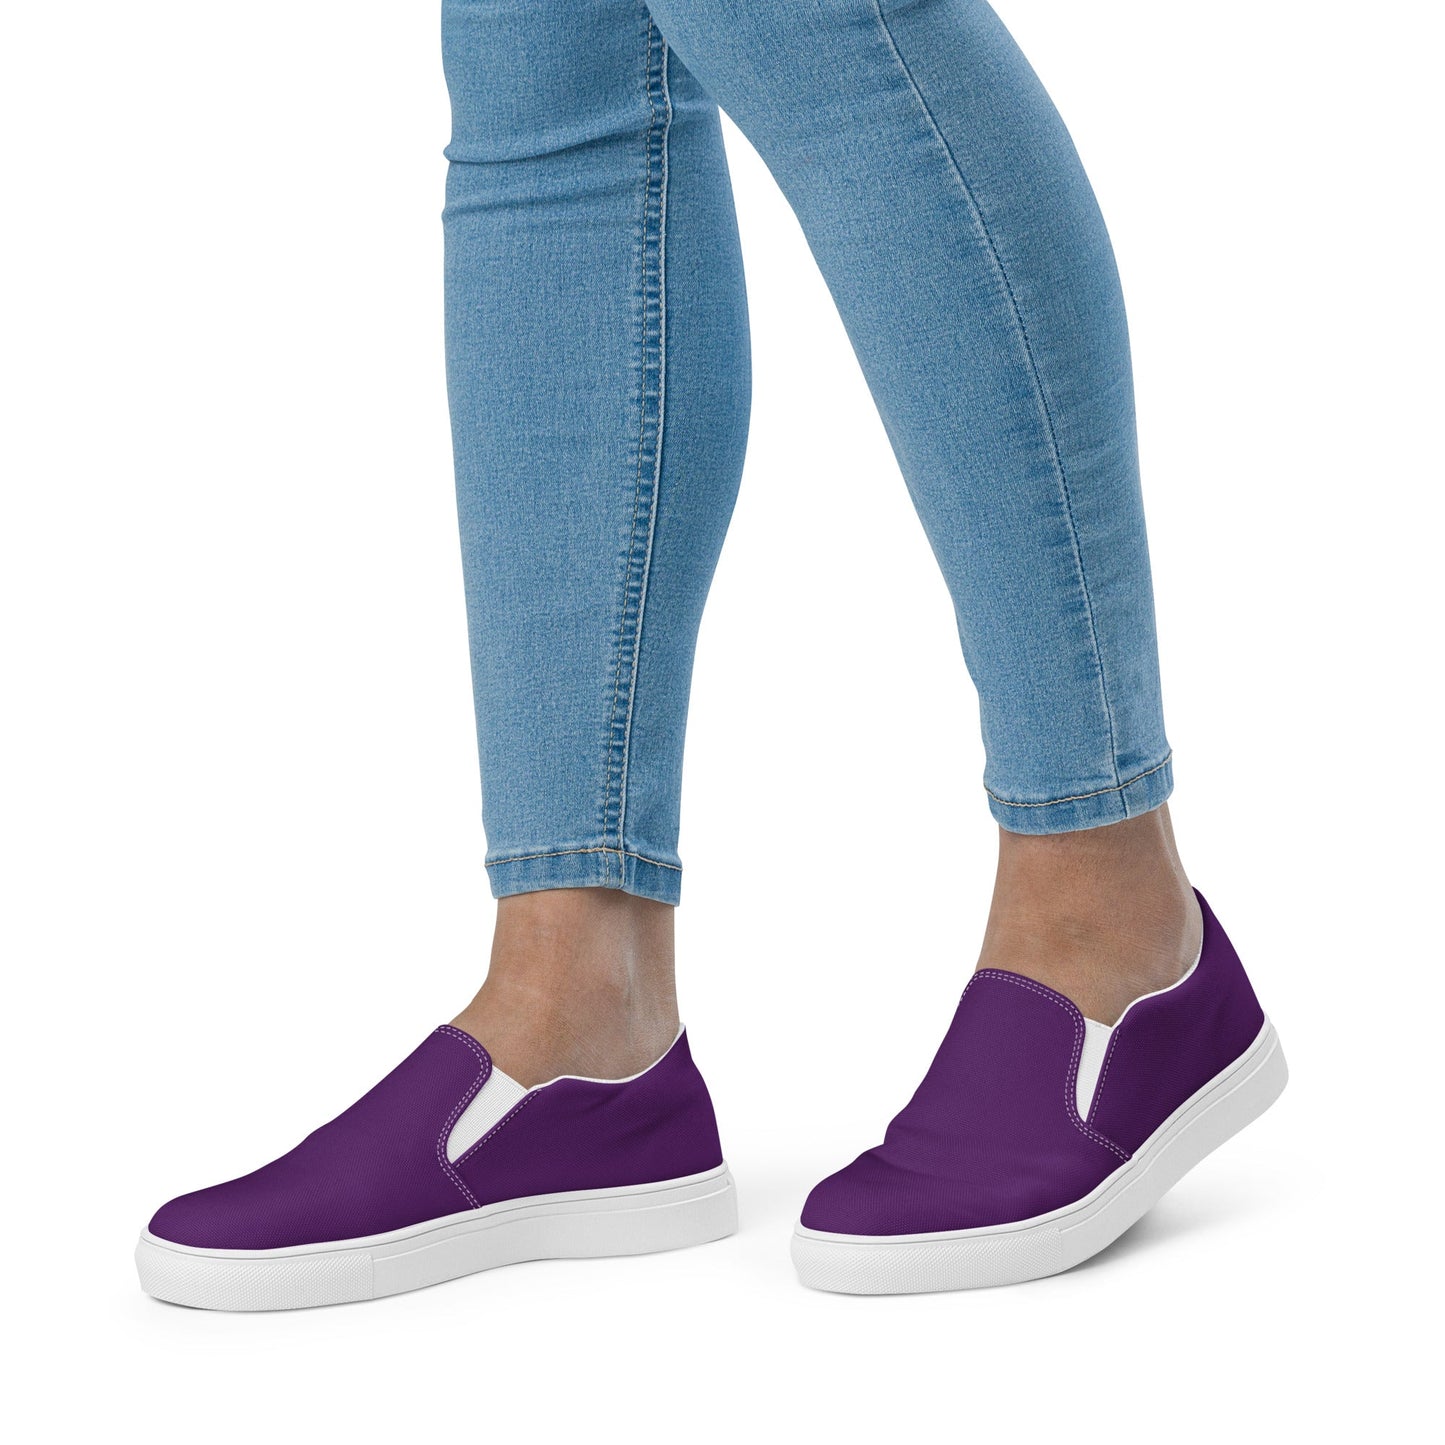 klasneakers Women’s slip-on canvas shoes - Royal Purple